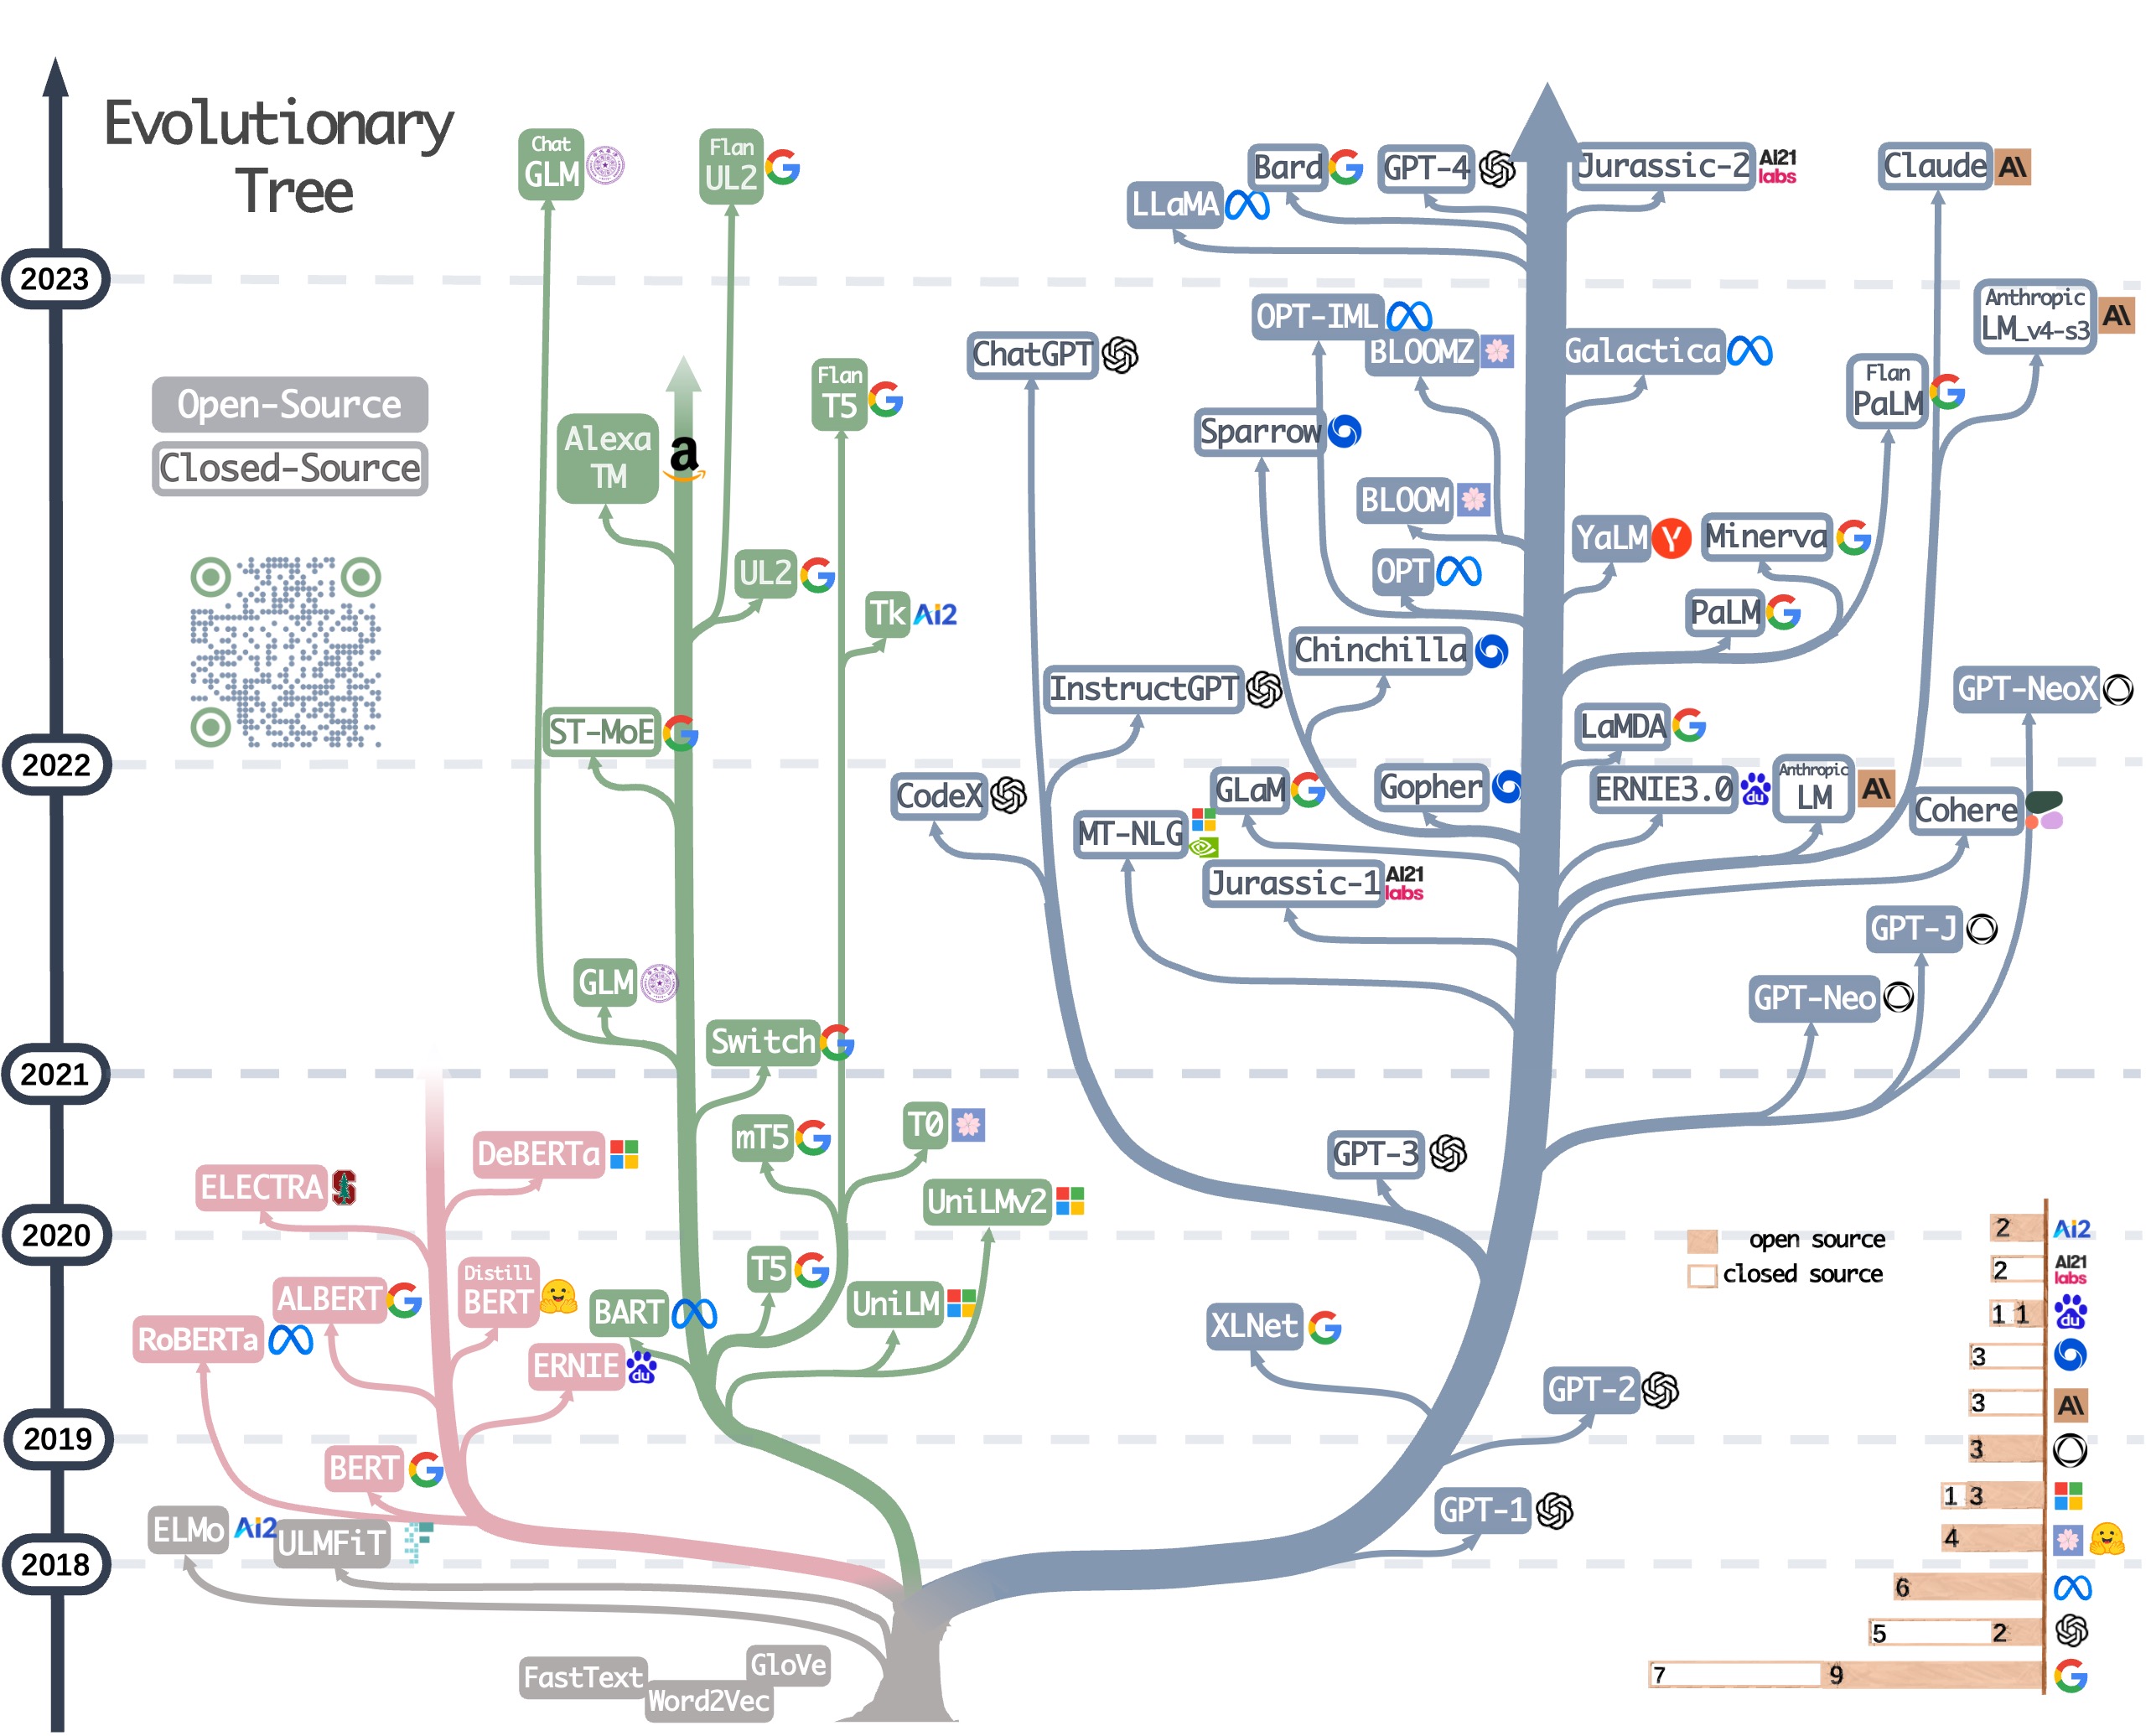 Evolutionary Tree of LLMs